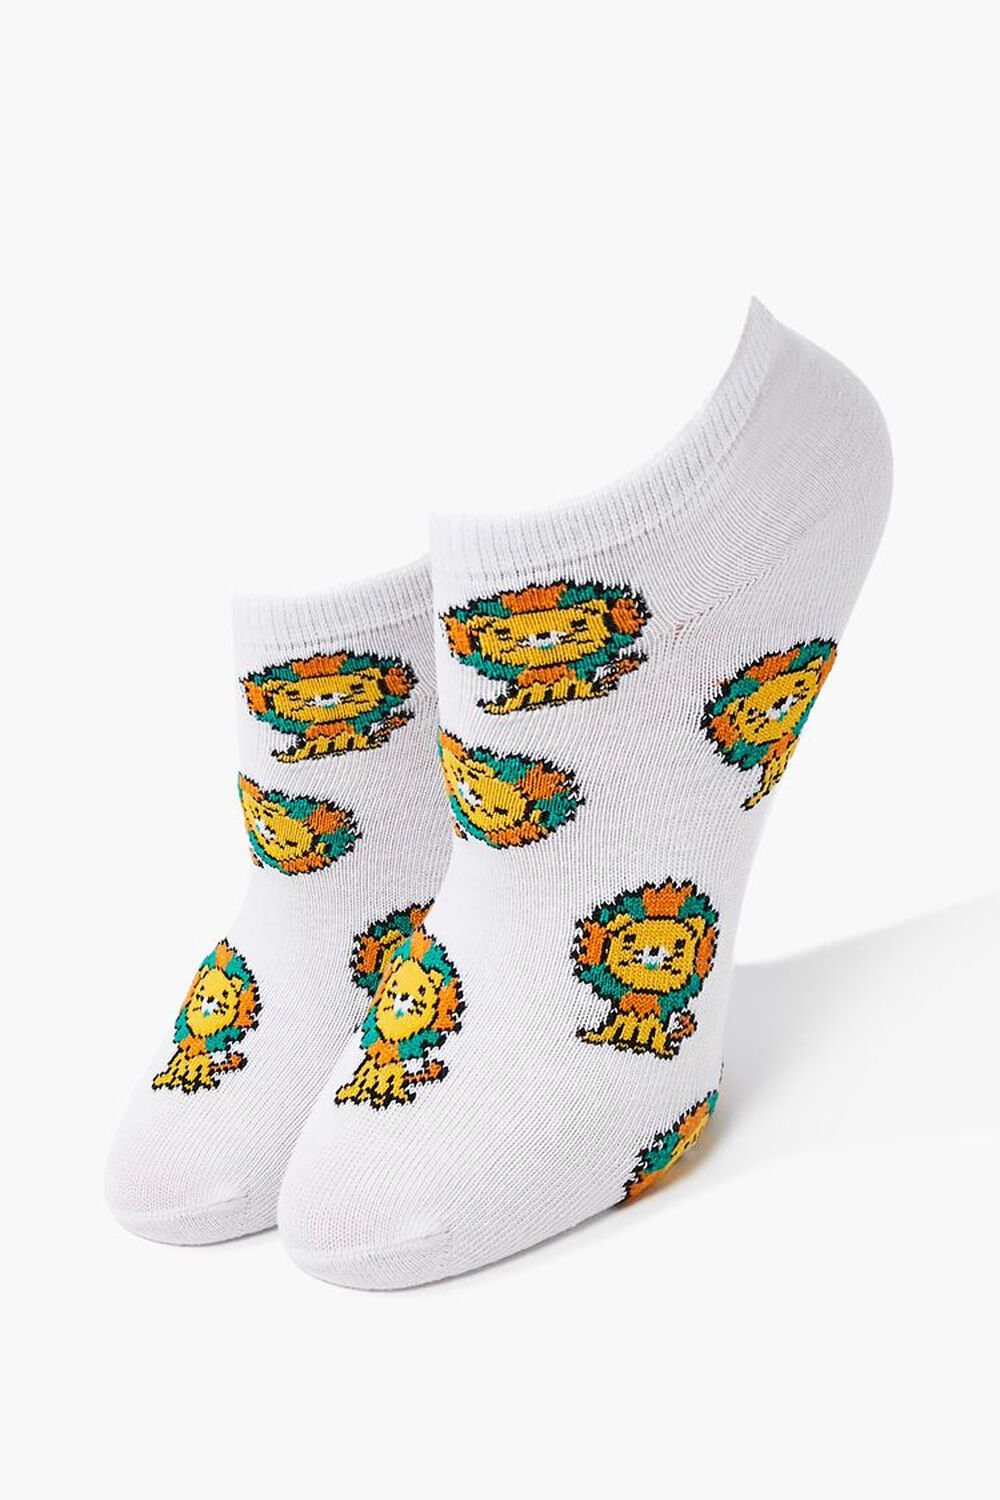 WHITE/MULTI Lion Graphic Ankle Socks, image 1